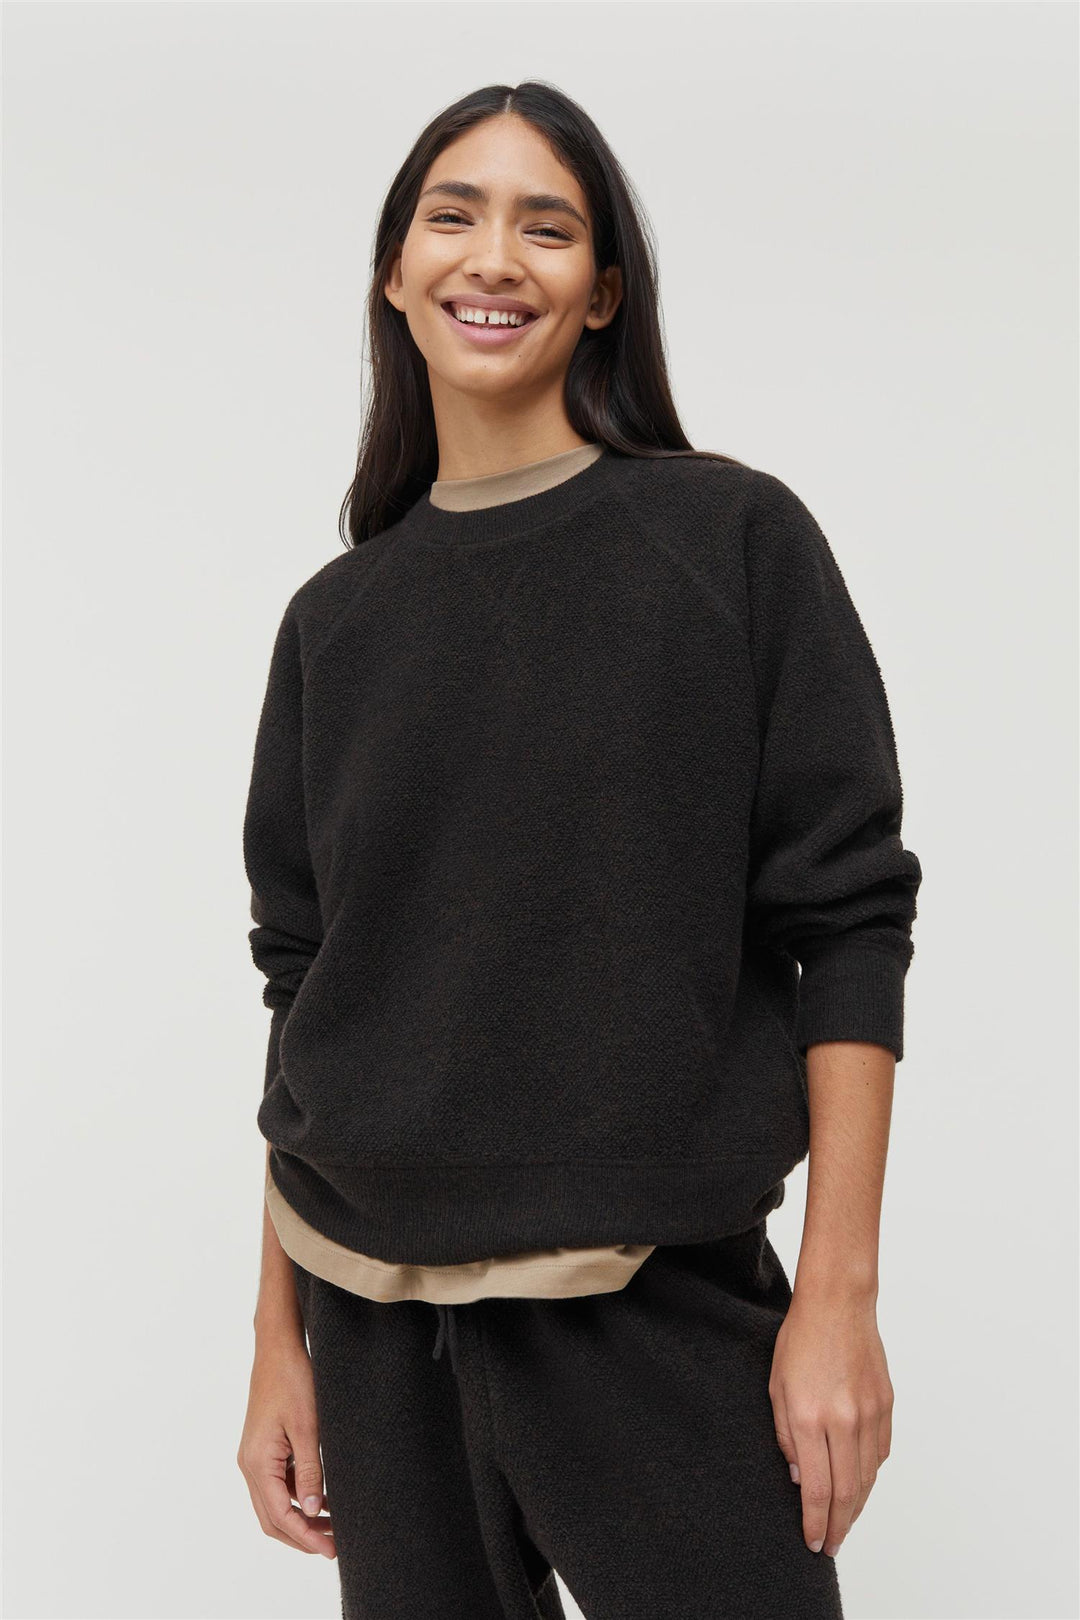 April Knitted Sweatshirt Dark Brown